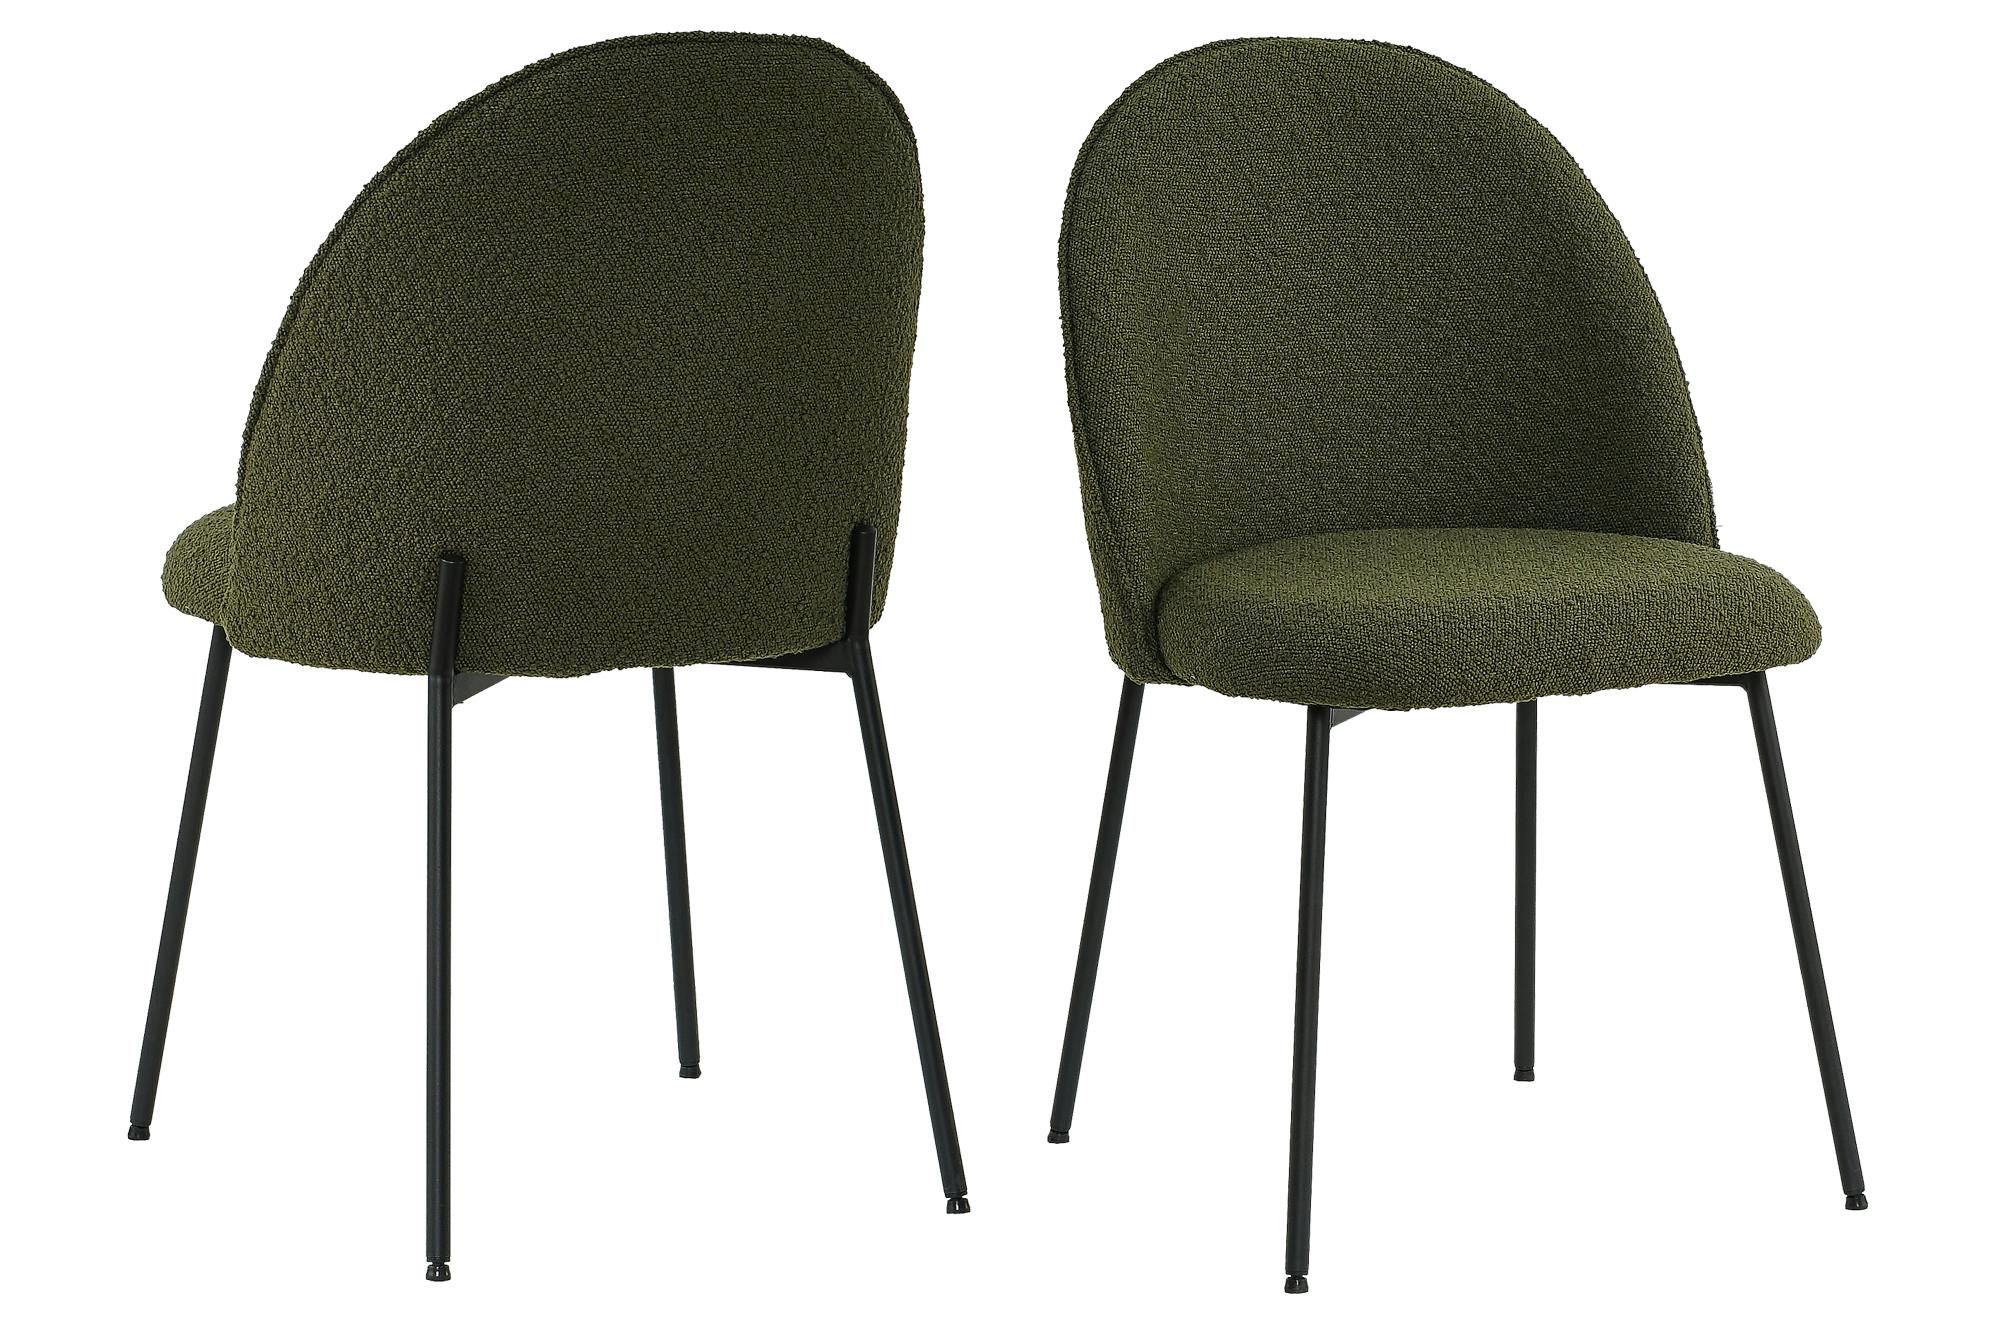 SIT Möbel Tom Tailor Stuhl 2er-Set | T-Bouclé Pad Chair | gepolstert grün|  Beine Metall schwarz | B57xT54xH52cm |02412-03 |Serie SIT&CHAIRS | METRO  Marktplatz